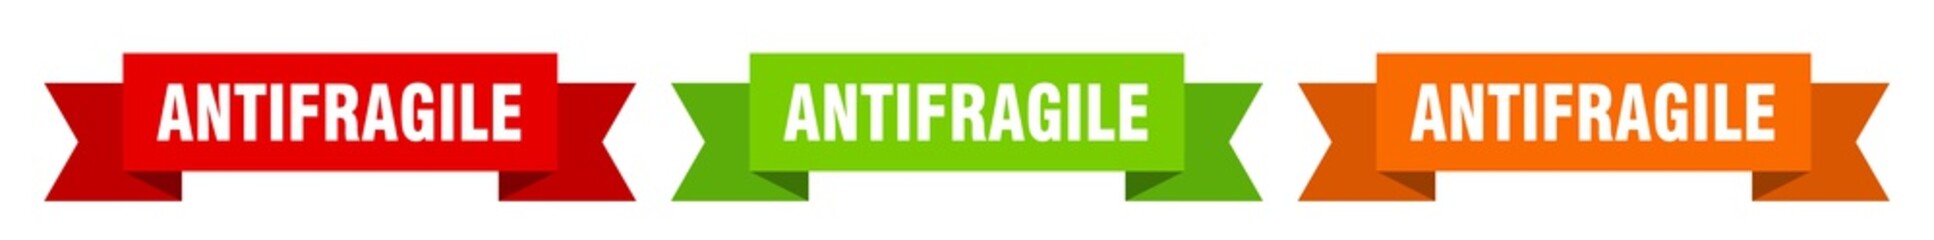 antifragile ribbon. antifragile isolated paper sign. banner